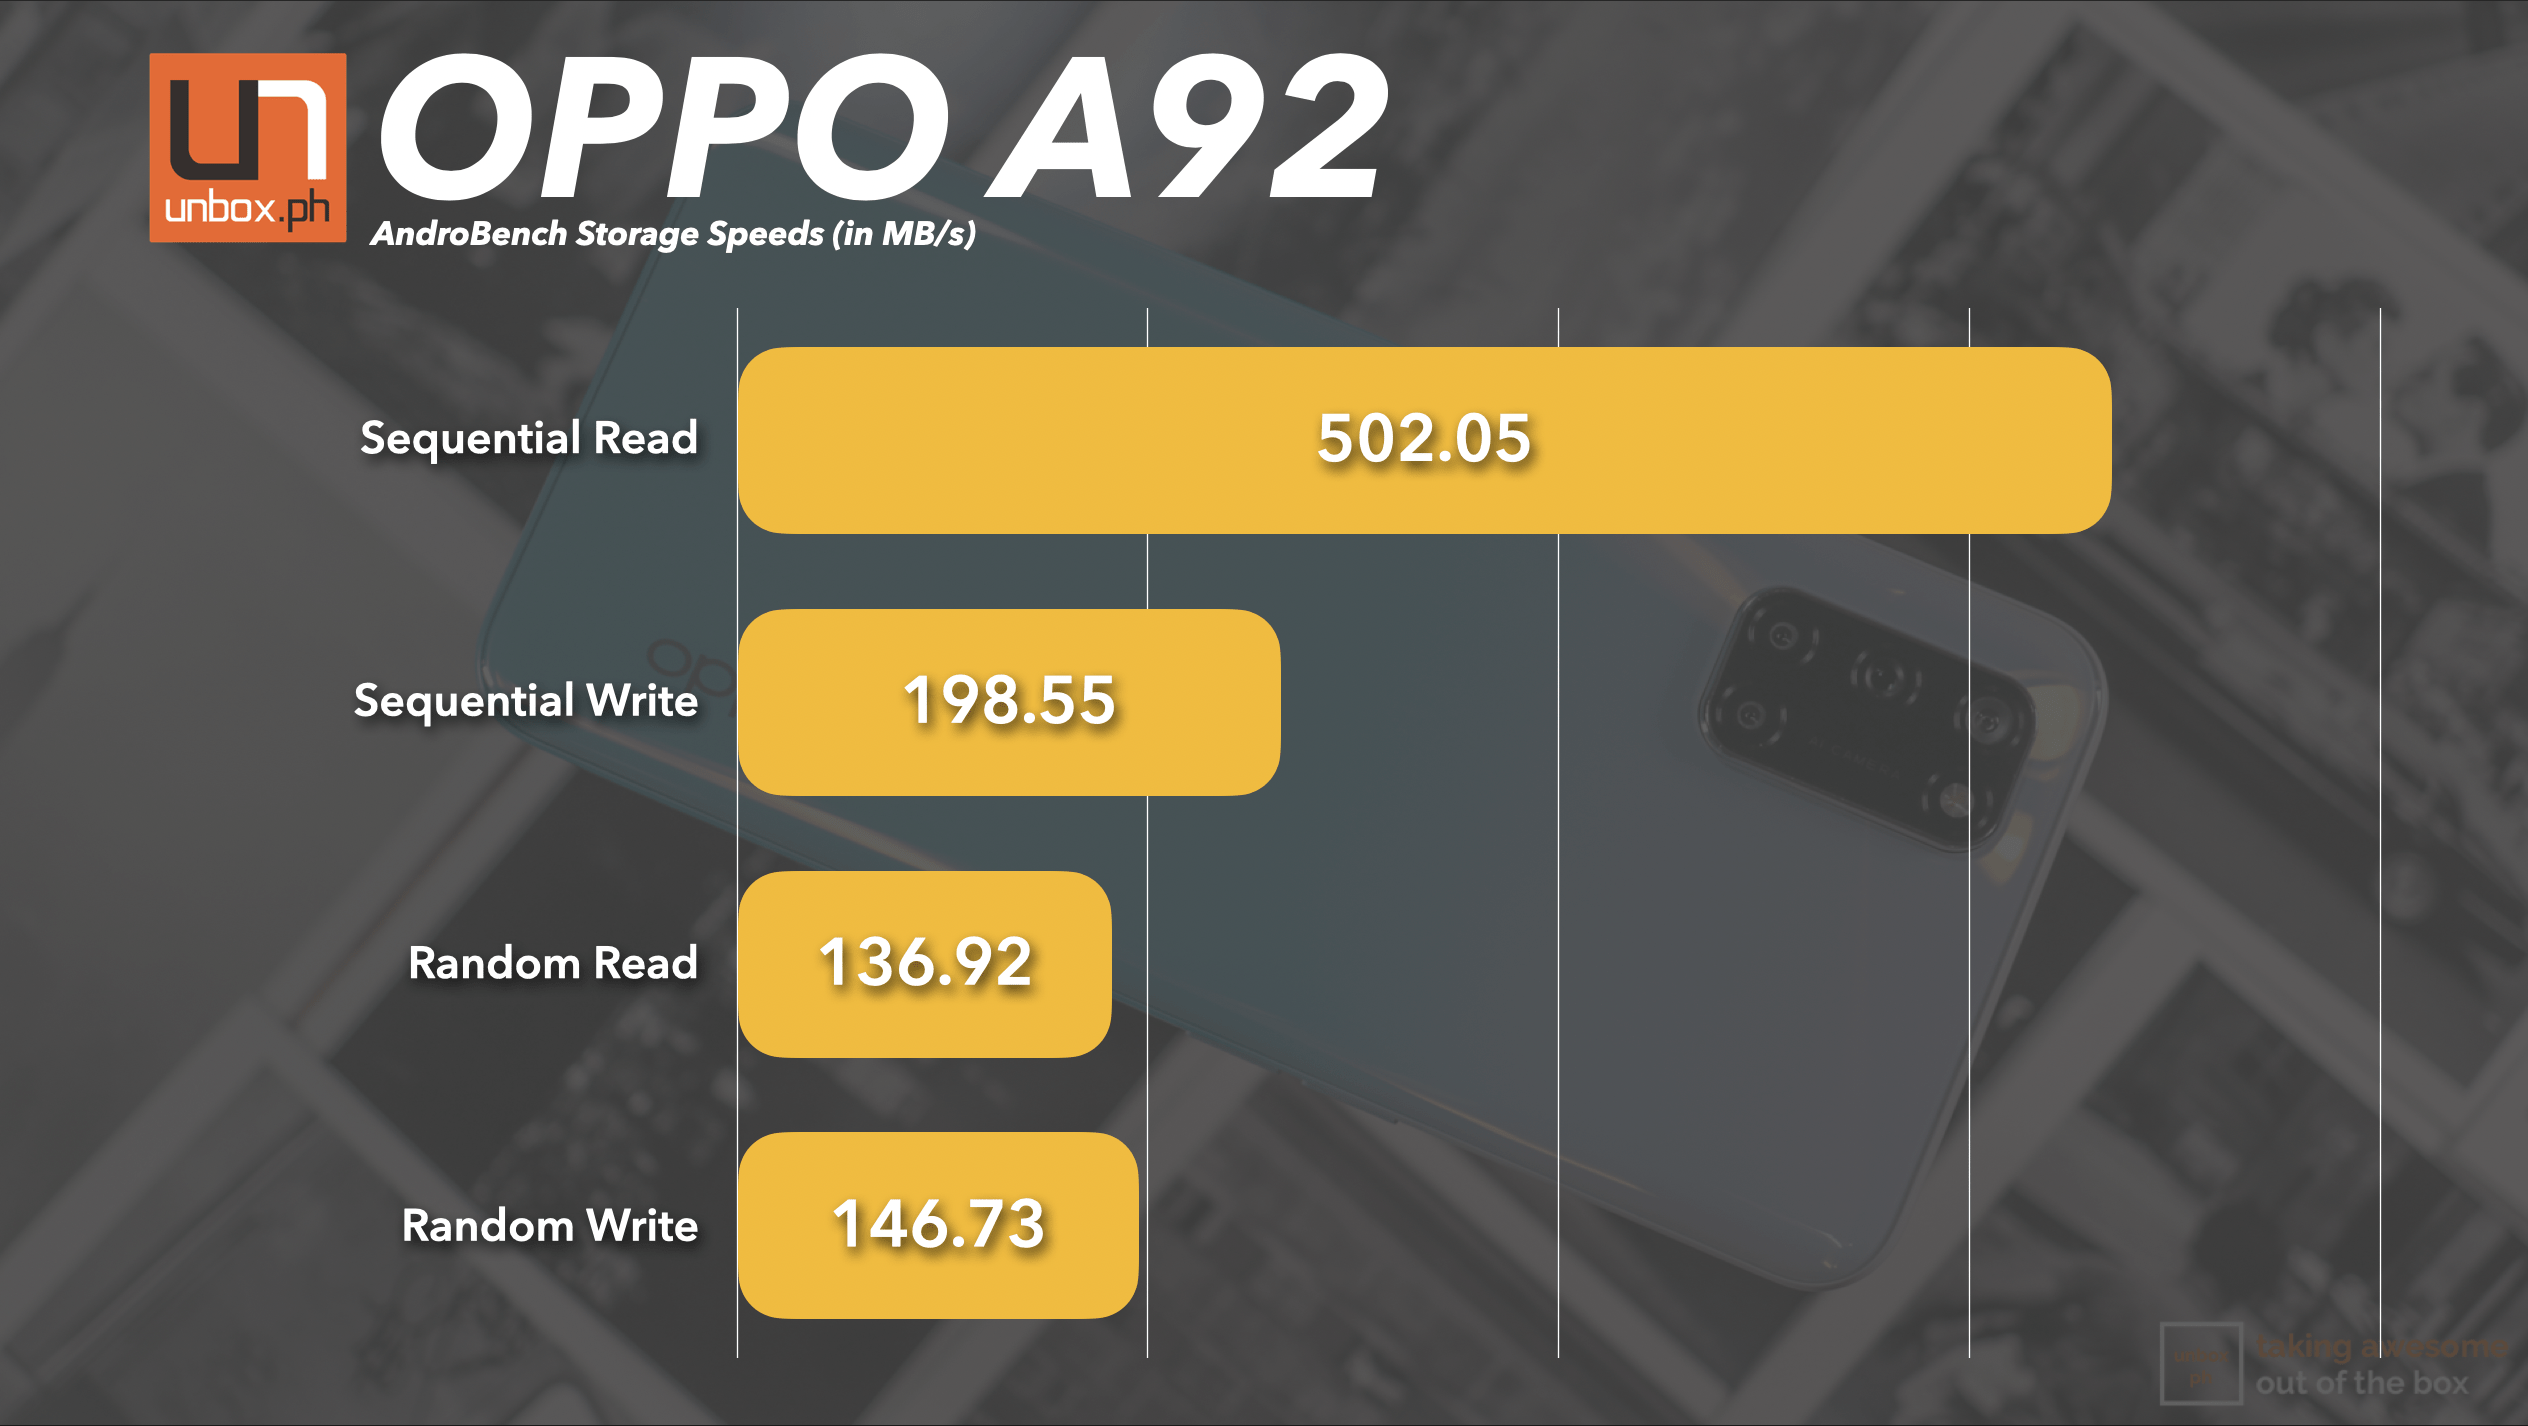 Oppo A92 Androbench Storage Speeds